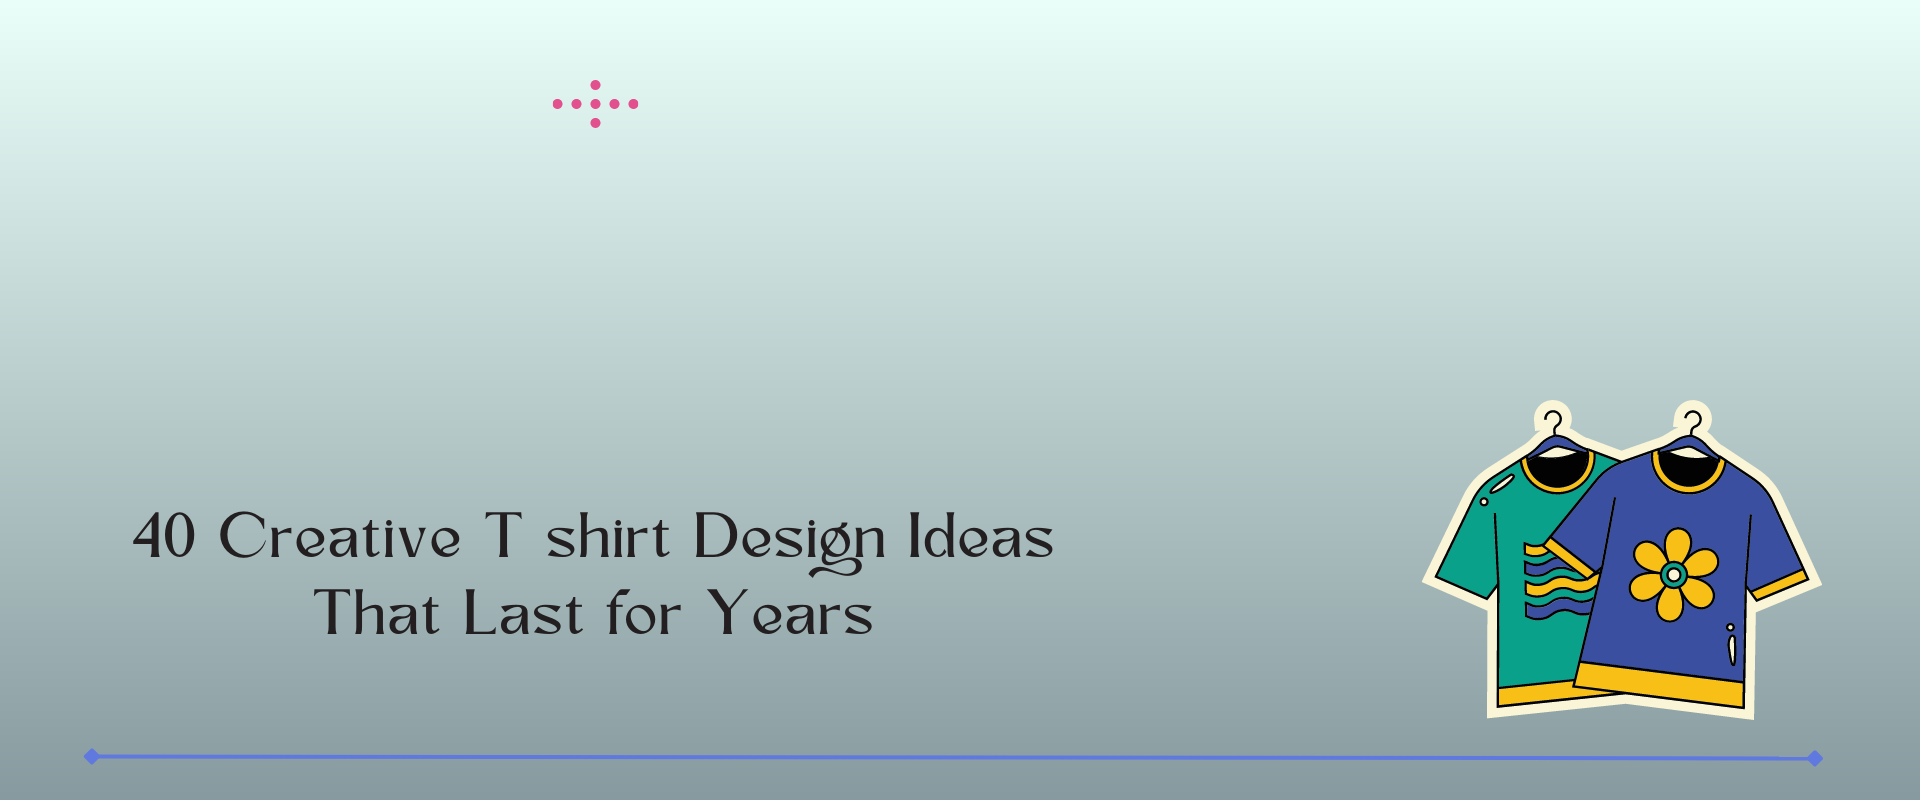 creative t shirt design ideas